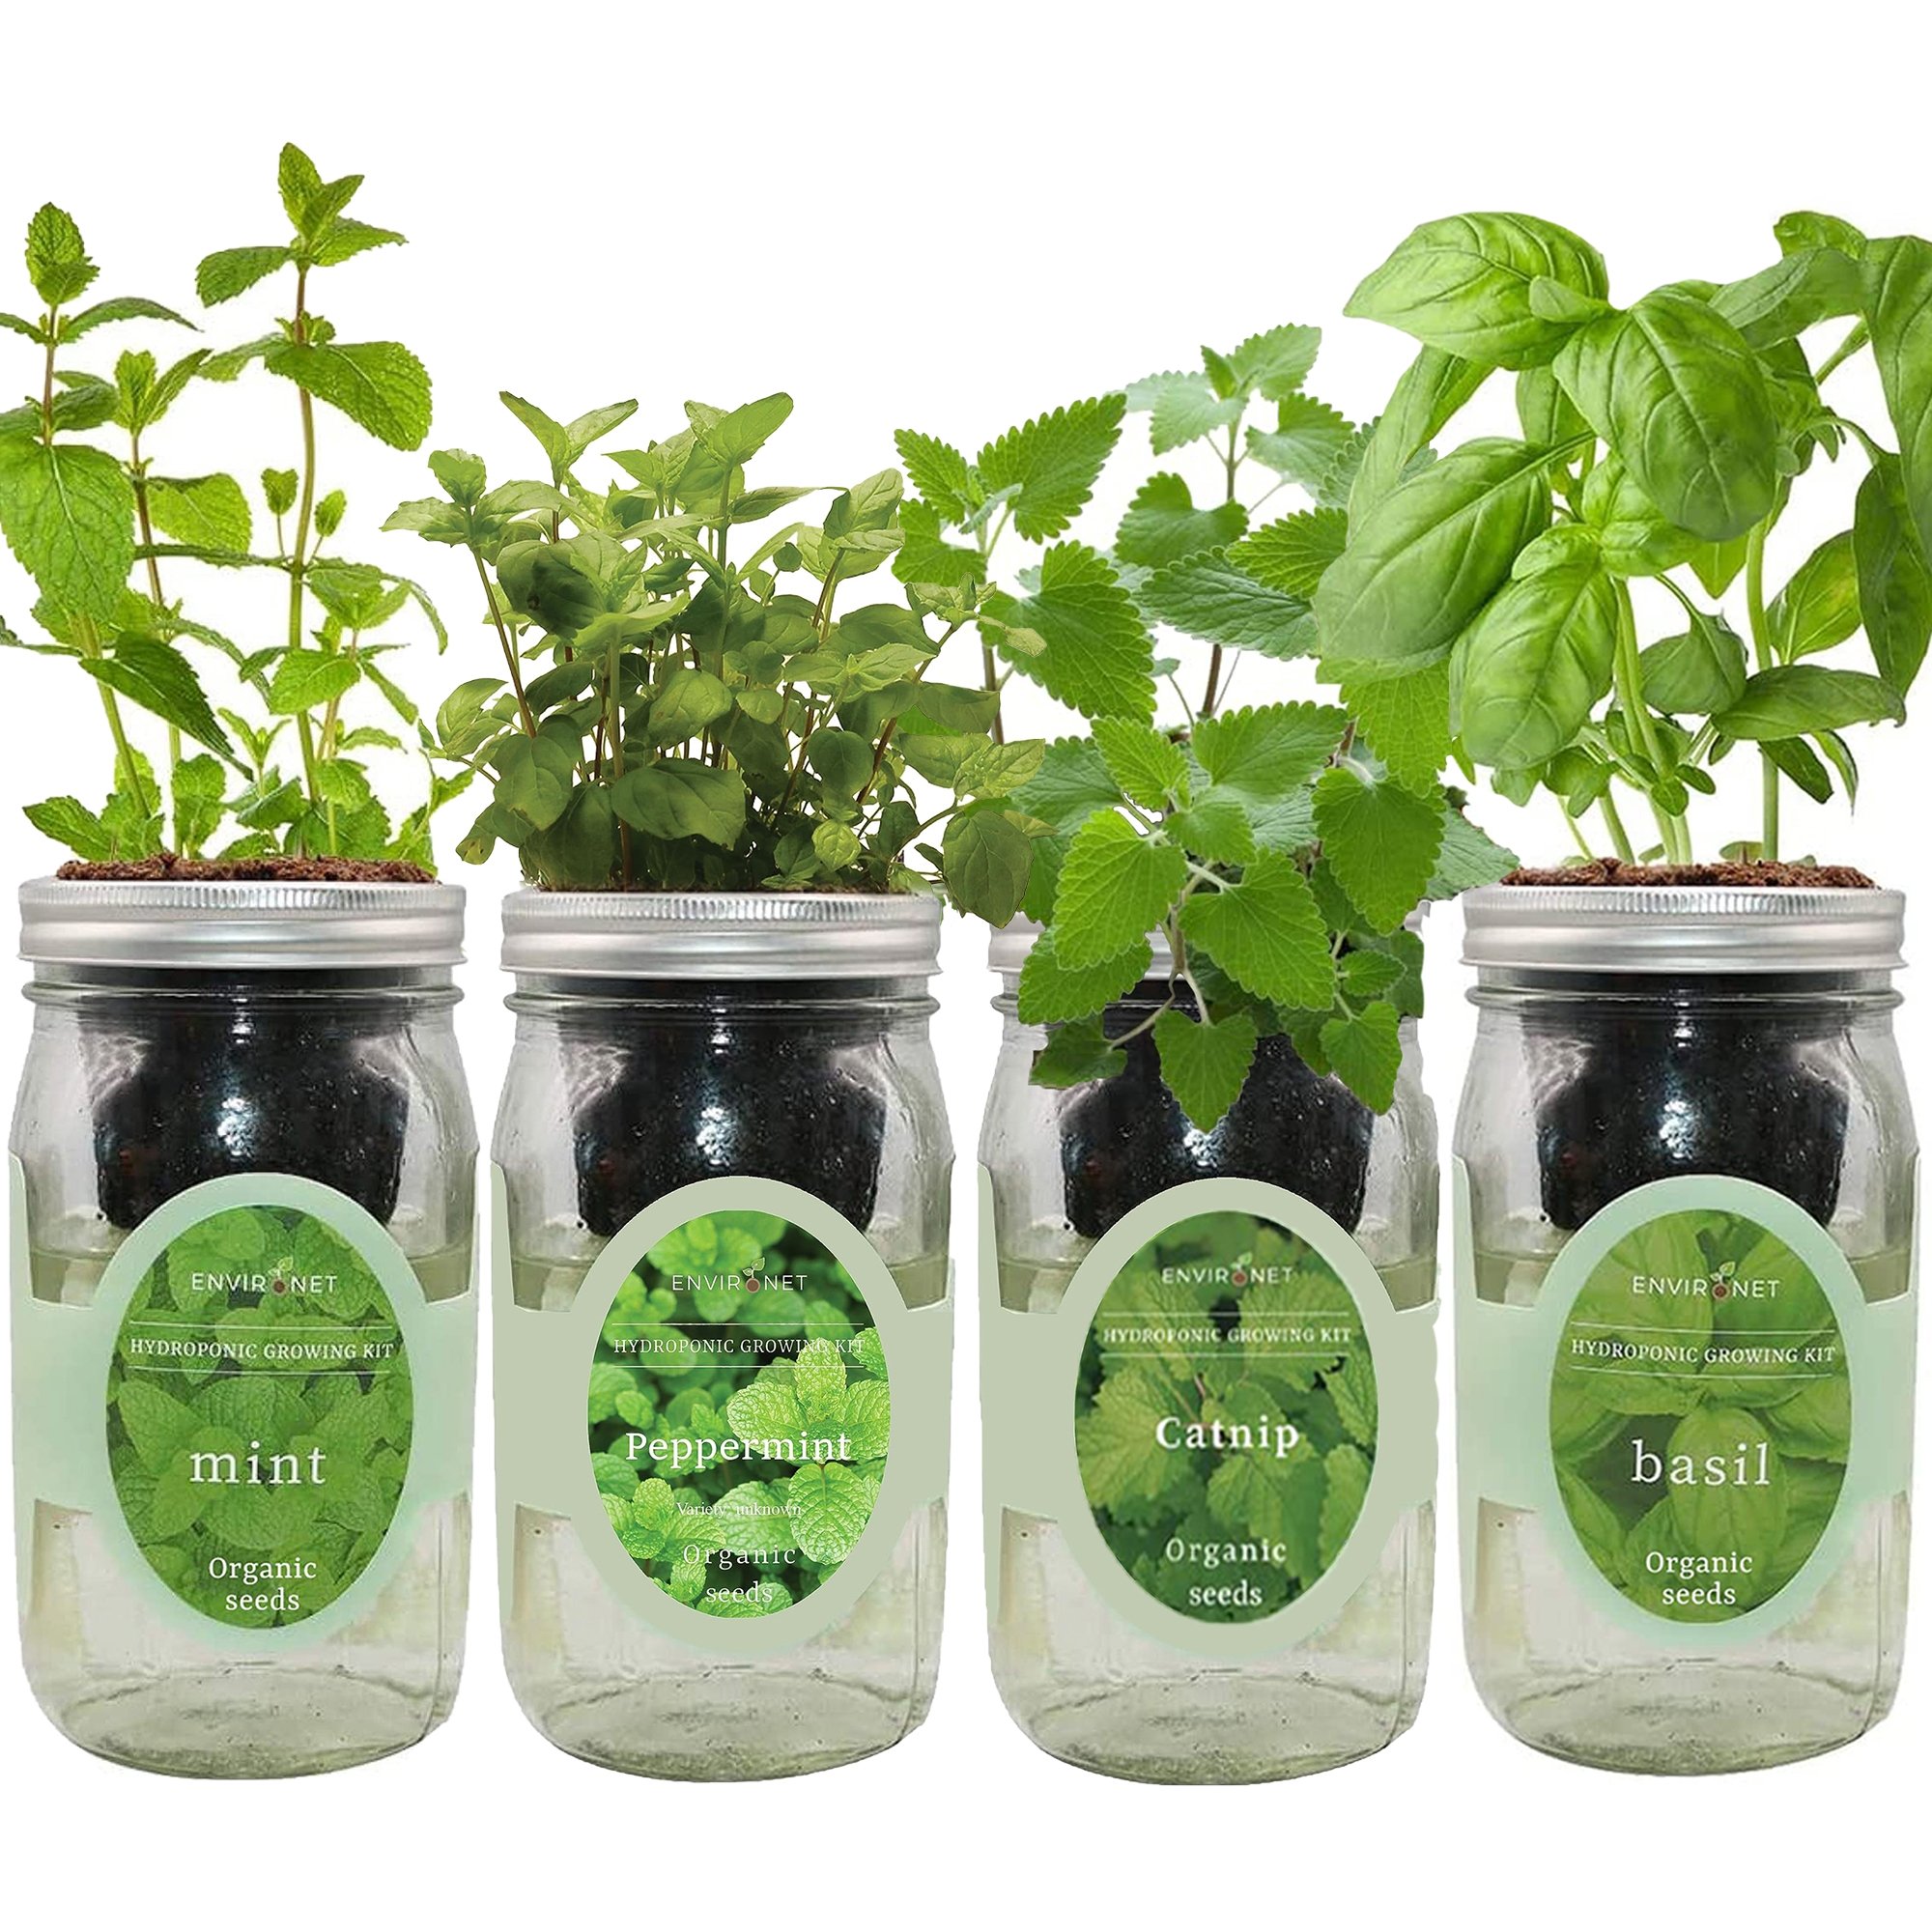 Hydroponic Herb Growing Kit Garden Bundle with Organic Seeds - Catnip,Peppermint,Mint, Basil